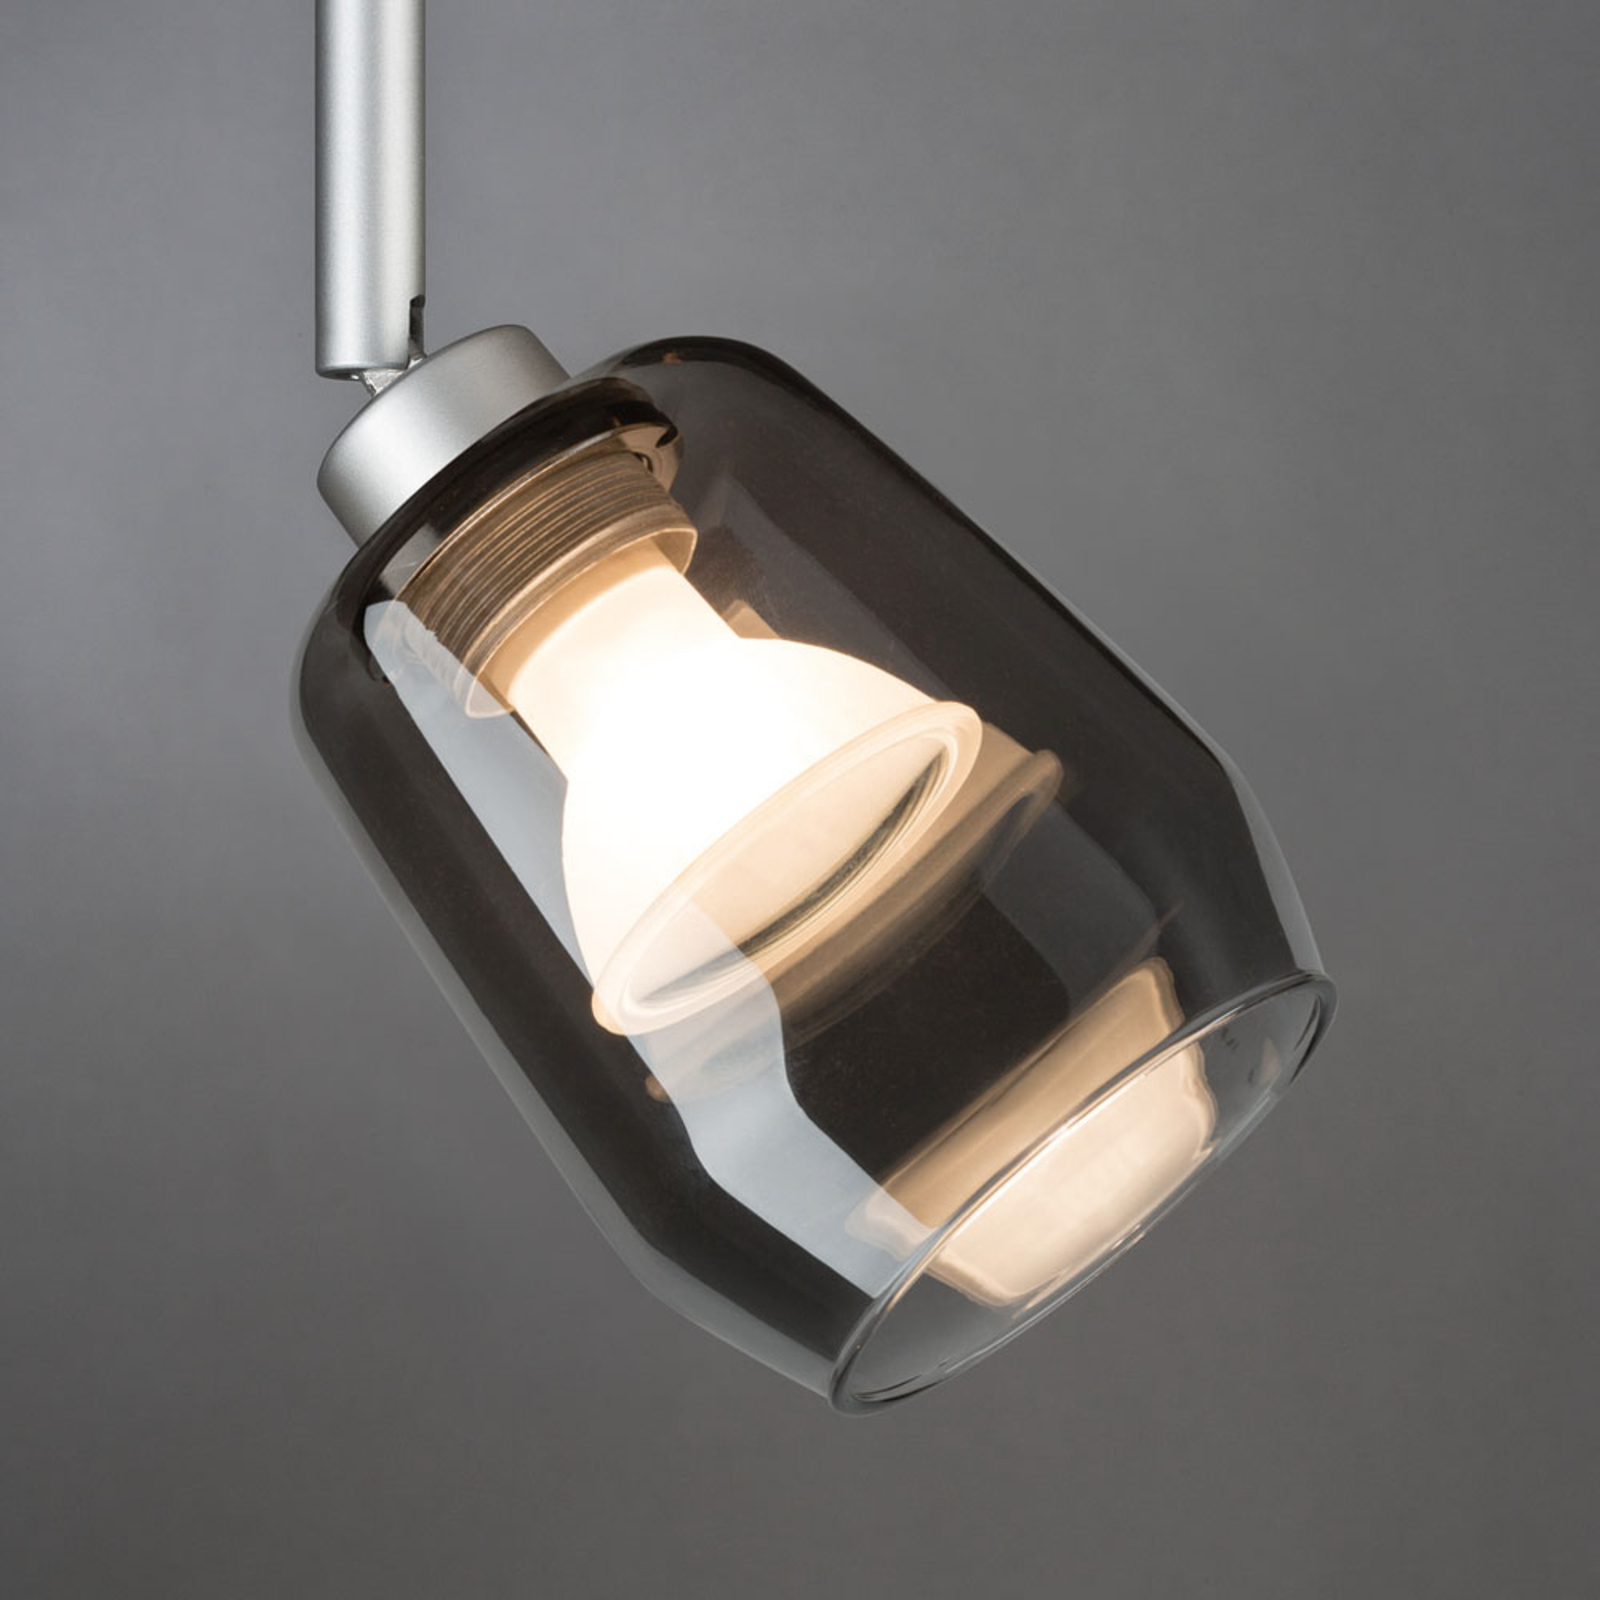 Paulmann Vento lampshade, smoke grey, Ø 8 cm, glass